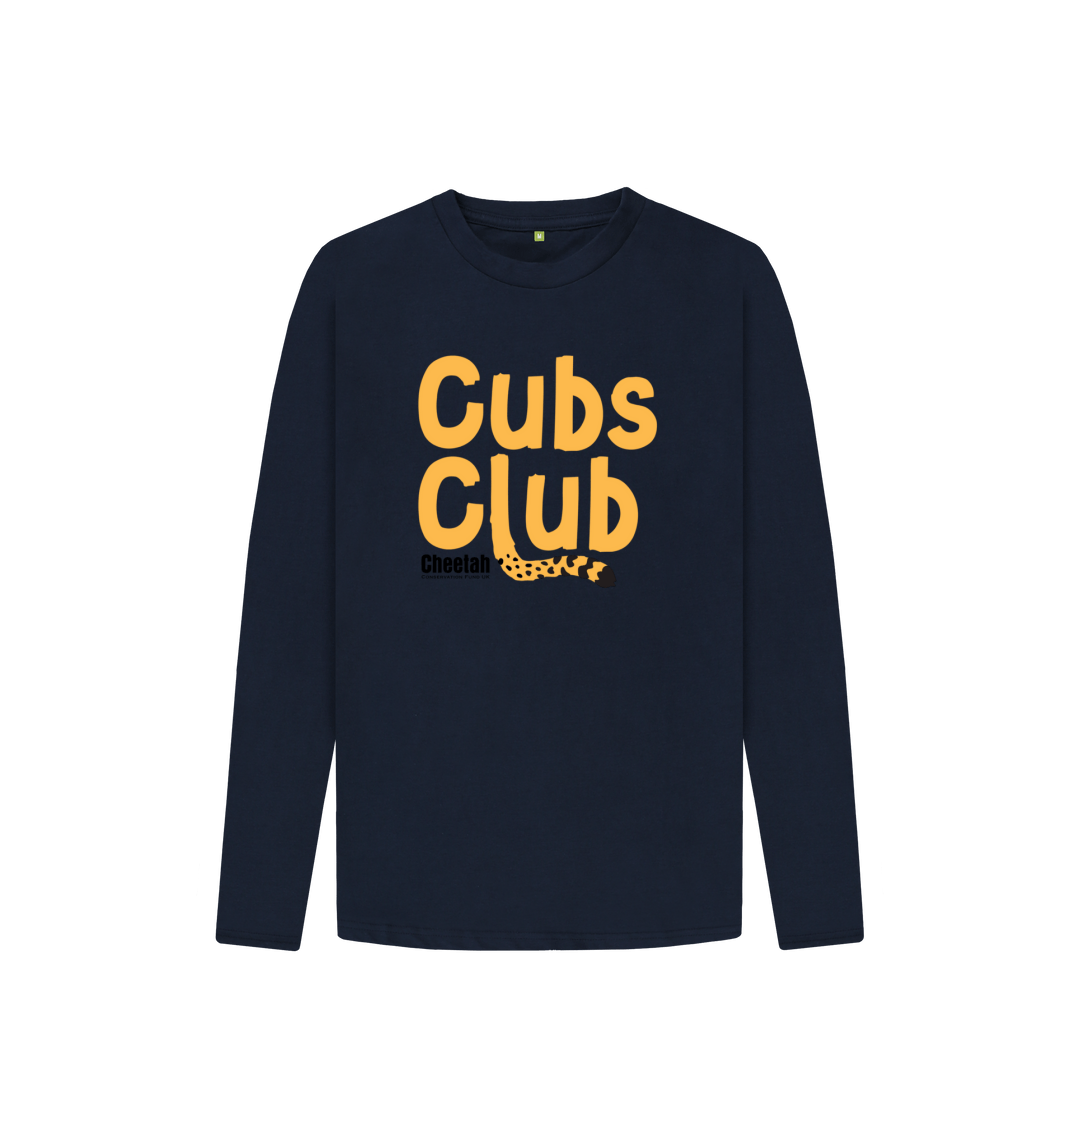 Cubs Club long-sleeved t-shirt by Jade Melady